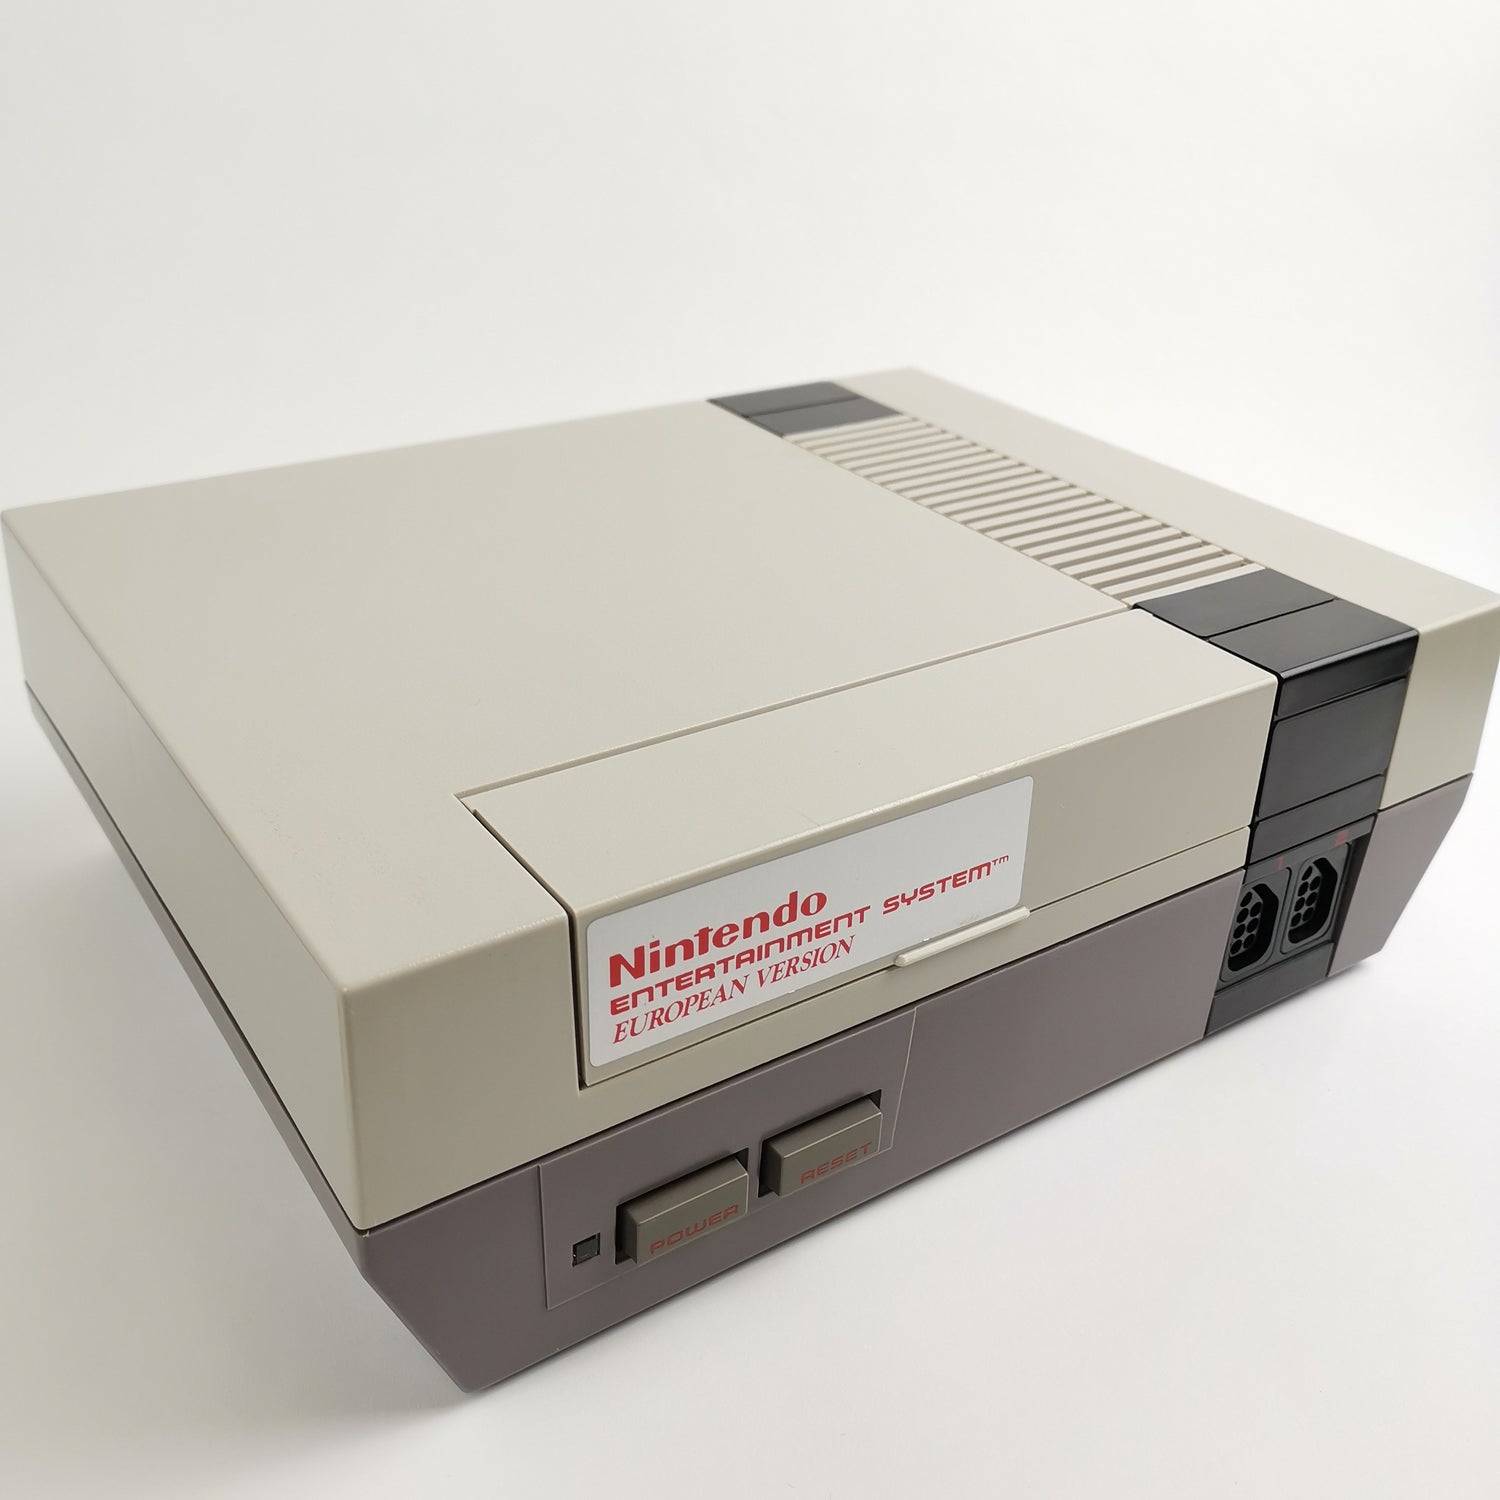 Nintendo Entertainment System: NES Console - Super Mario Bros. 3 Edition OVP